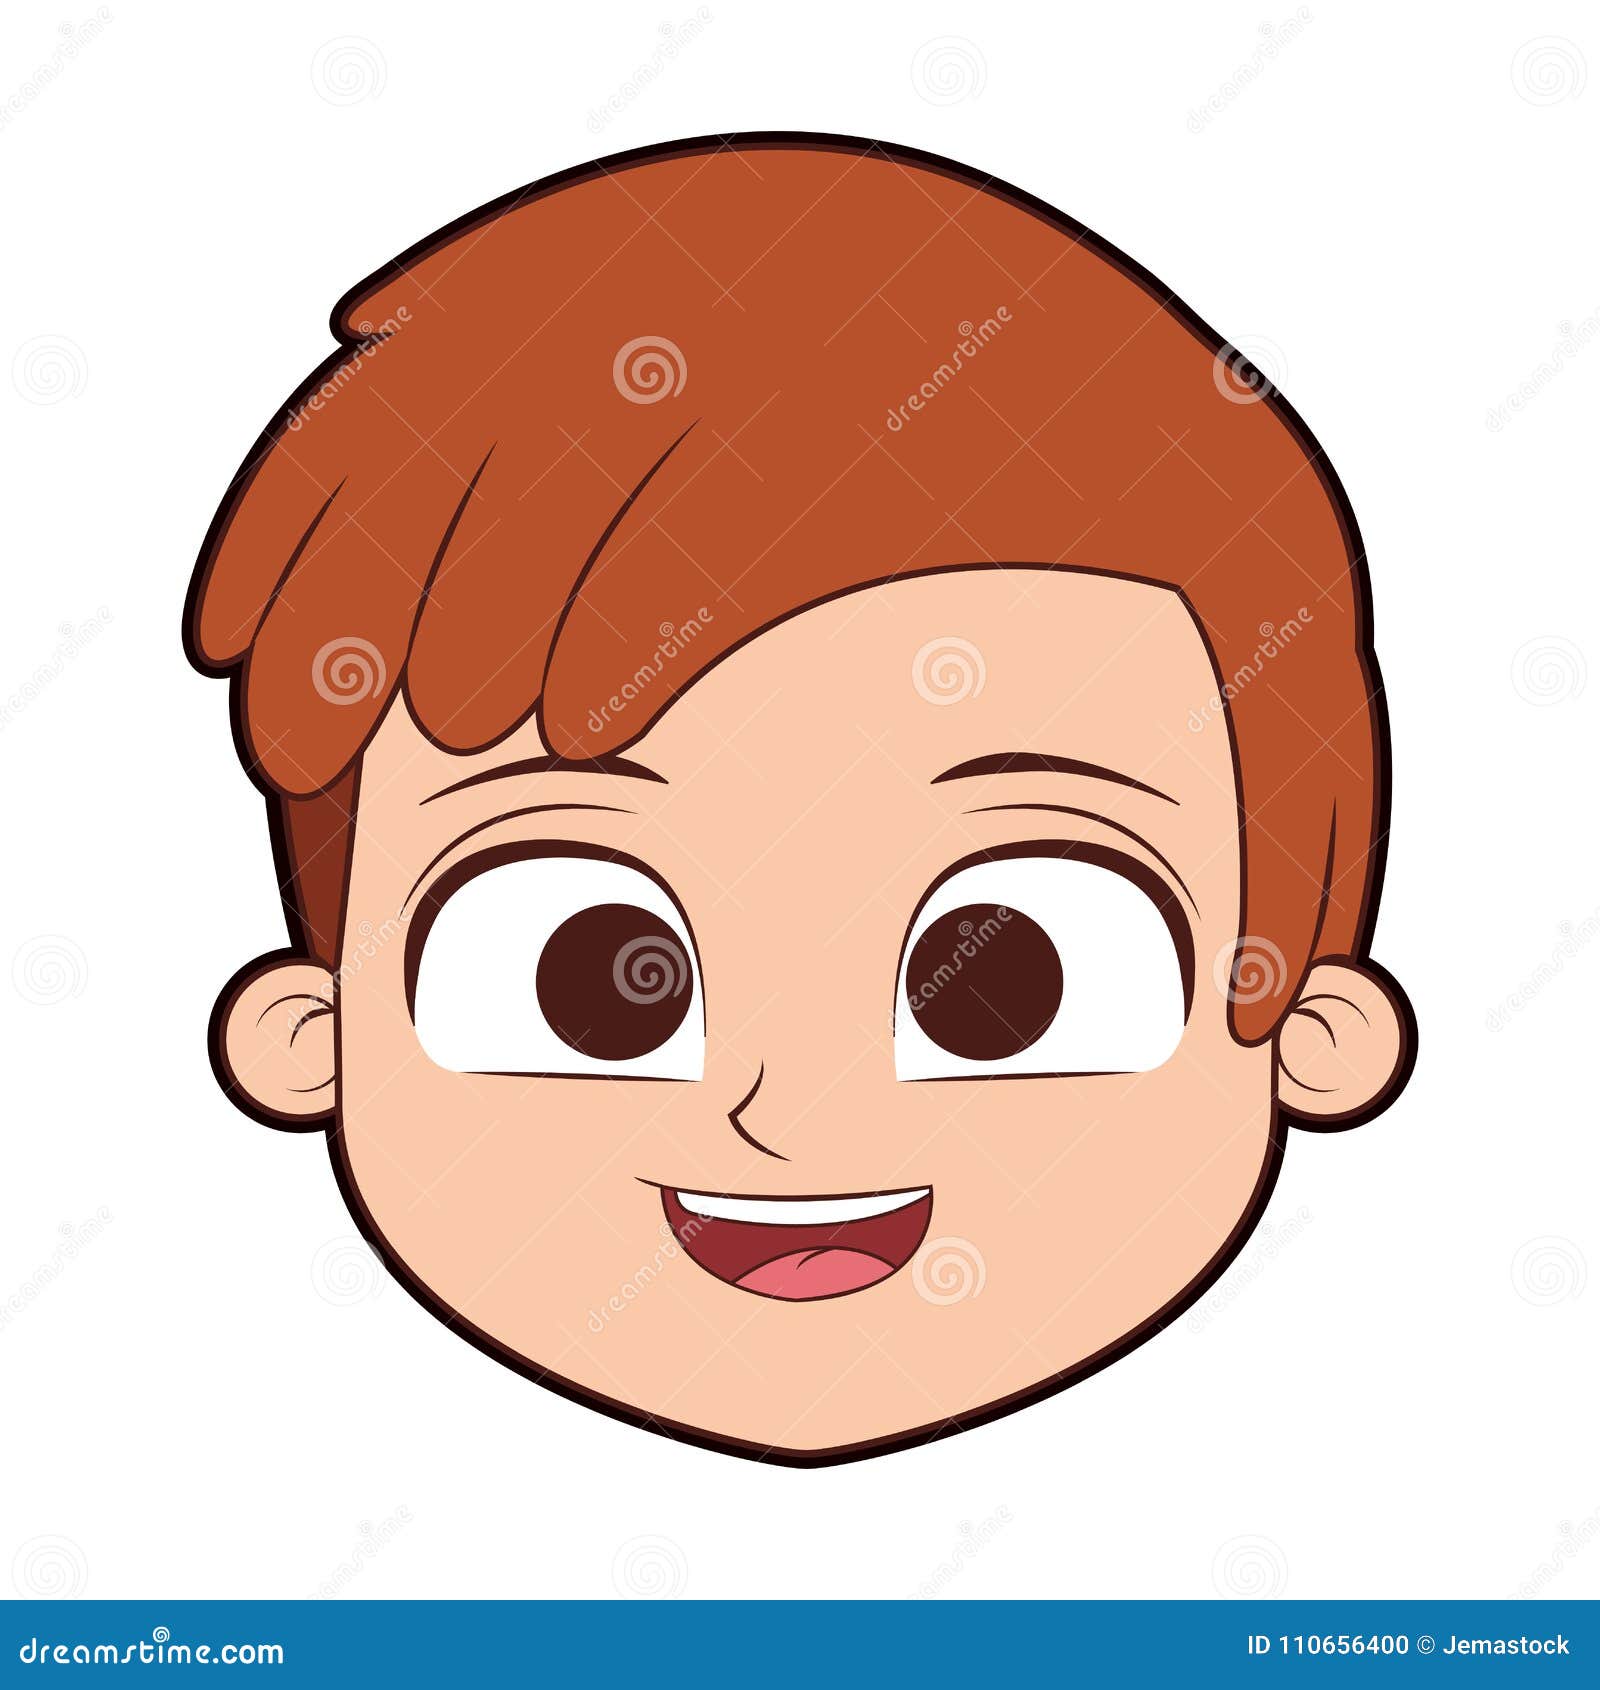 Cute boy face cartoon stock vector. Illustration of small - 110656400